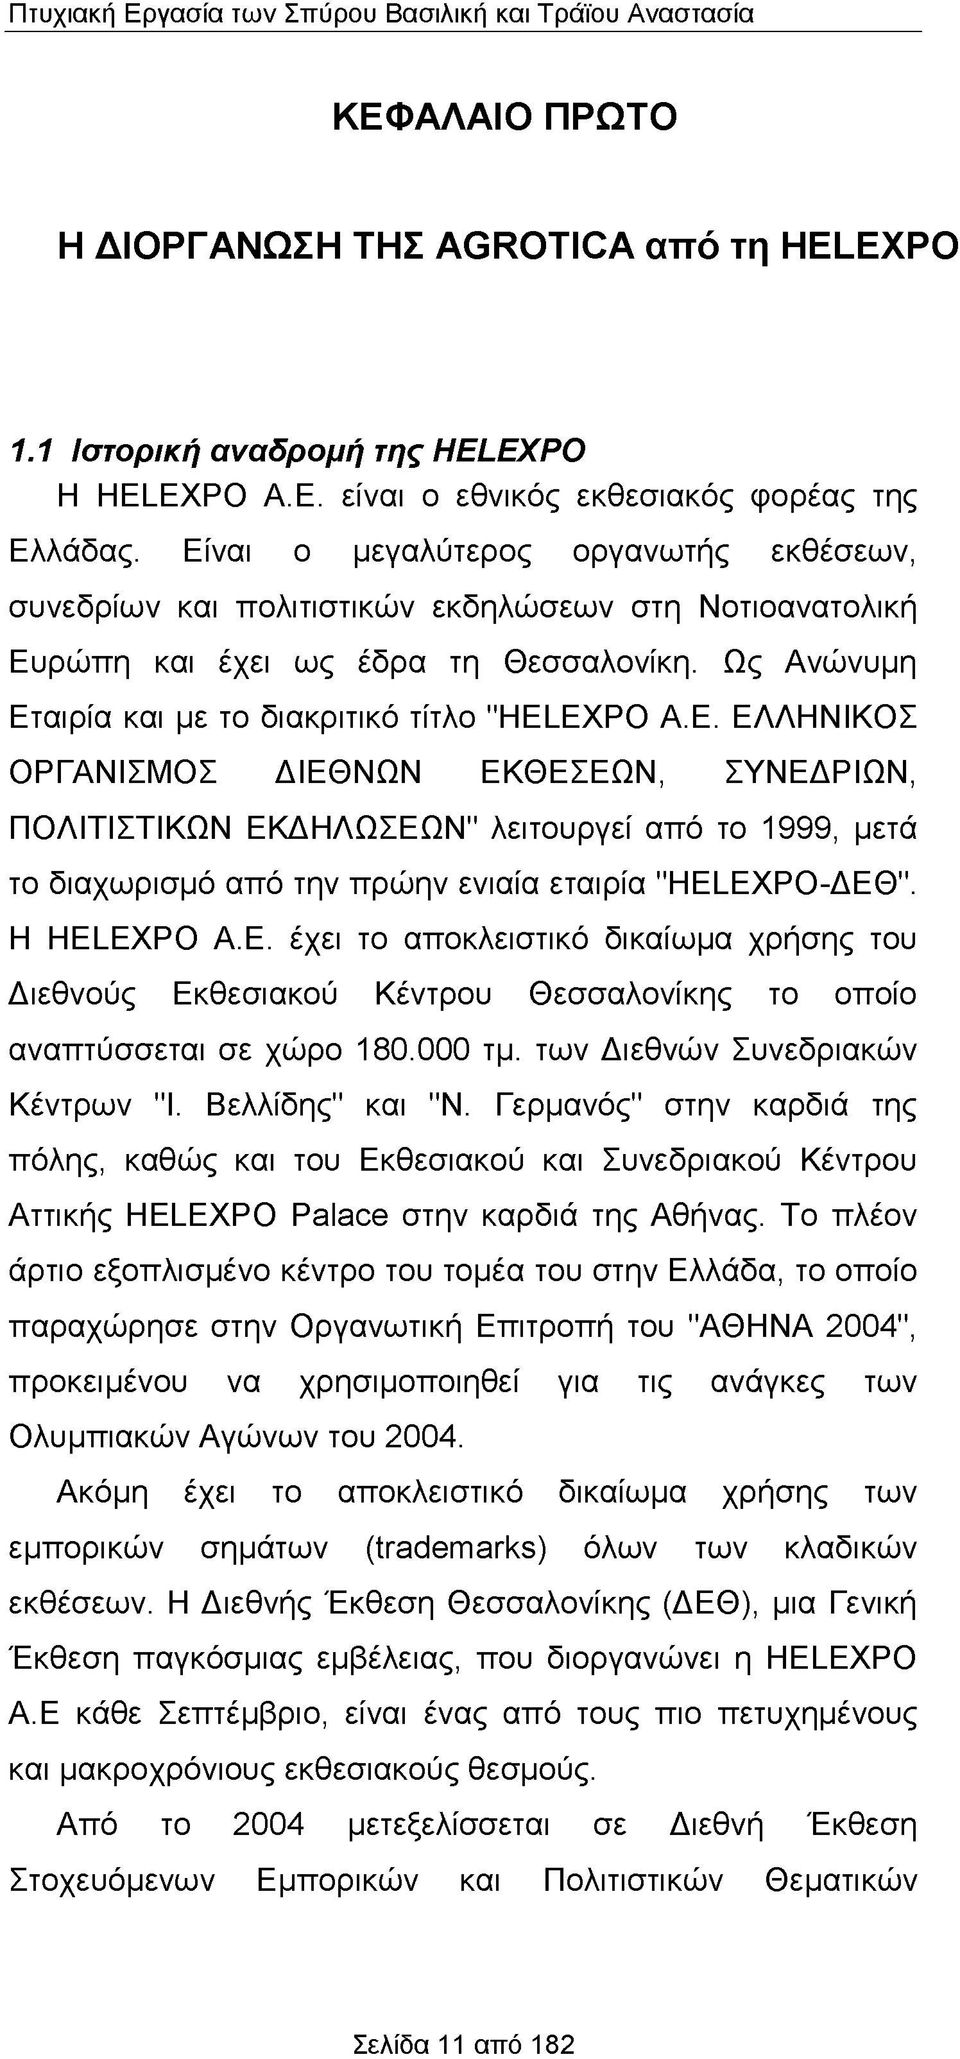 EXPO A.E. ΕΛΛΗΝΙΚΟΣ ΟΡΓΑΝΙΣΜΟΣ ΔΙΕΘΝΩΝ ΕΚΘΕΣΕΩΝ, ΣΥΝΕΔΡΙΩΝ, ΠΟΛΙΤΙΣΤΙΚΩΝ ΕΚΔΗΛΩΣΕΩΝ" λειτουργεί από το 1999, μετά το διαχωρισμό από την πρώην ενιαία εταιρία "HELEXPO-ΔΕΘ". Η HELEXPO A.E. έχει το αποκλειστικό δικαίωμα χρήσης του Διεθνούς Εκθεσιακού Κέντρου Θεσσαλονίκης το οποίο αναπτύσσεται σε χώρο 180.